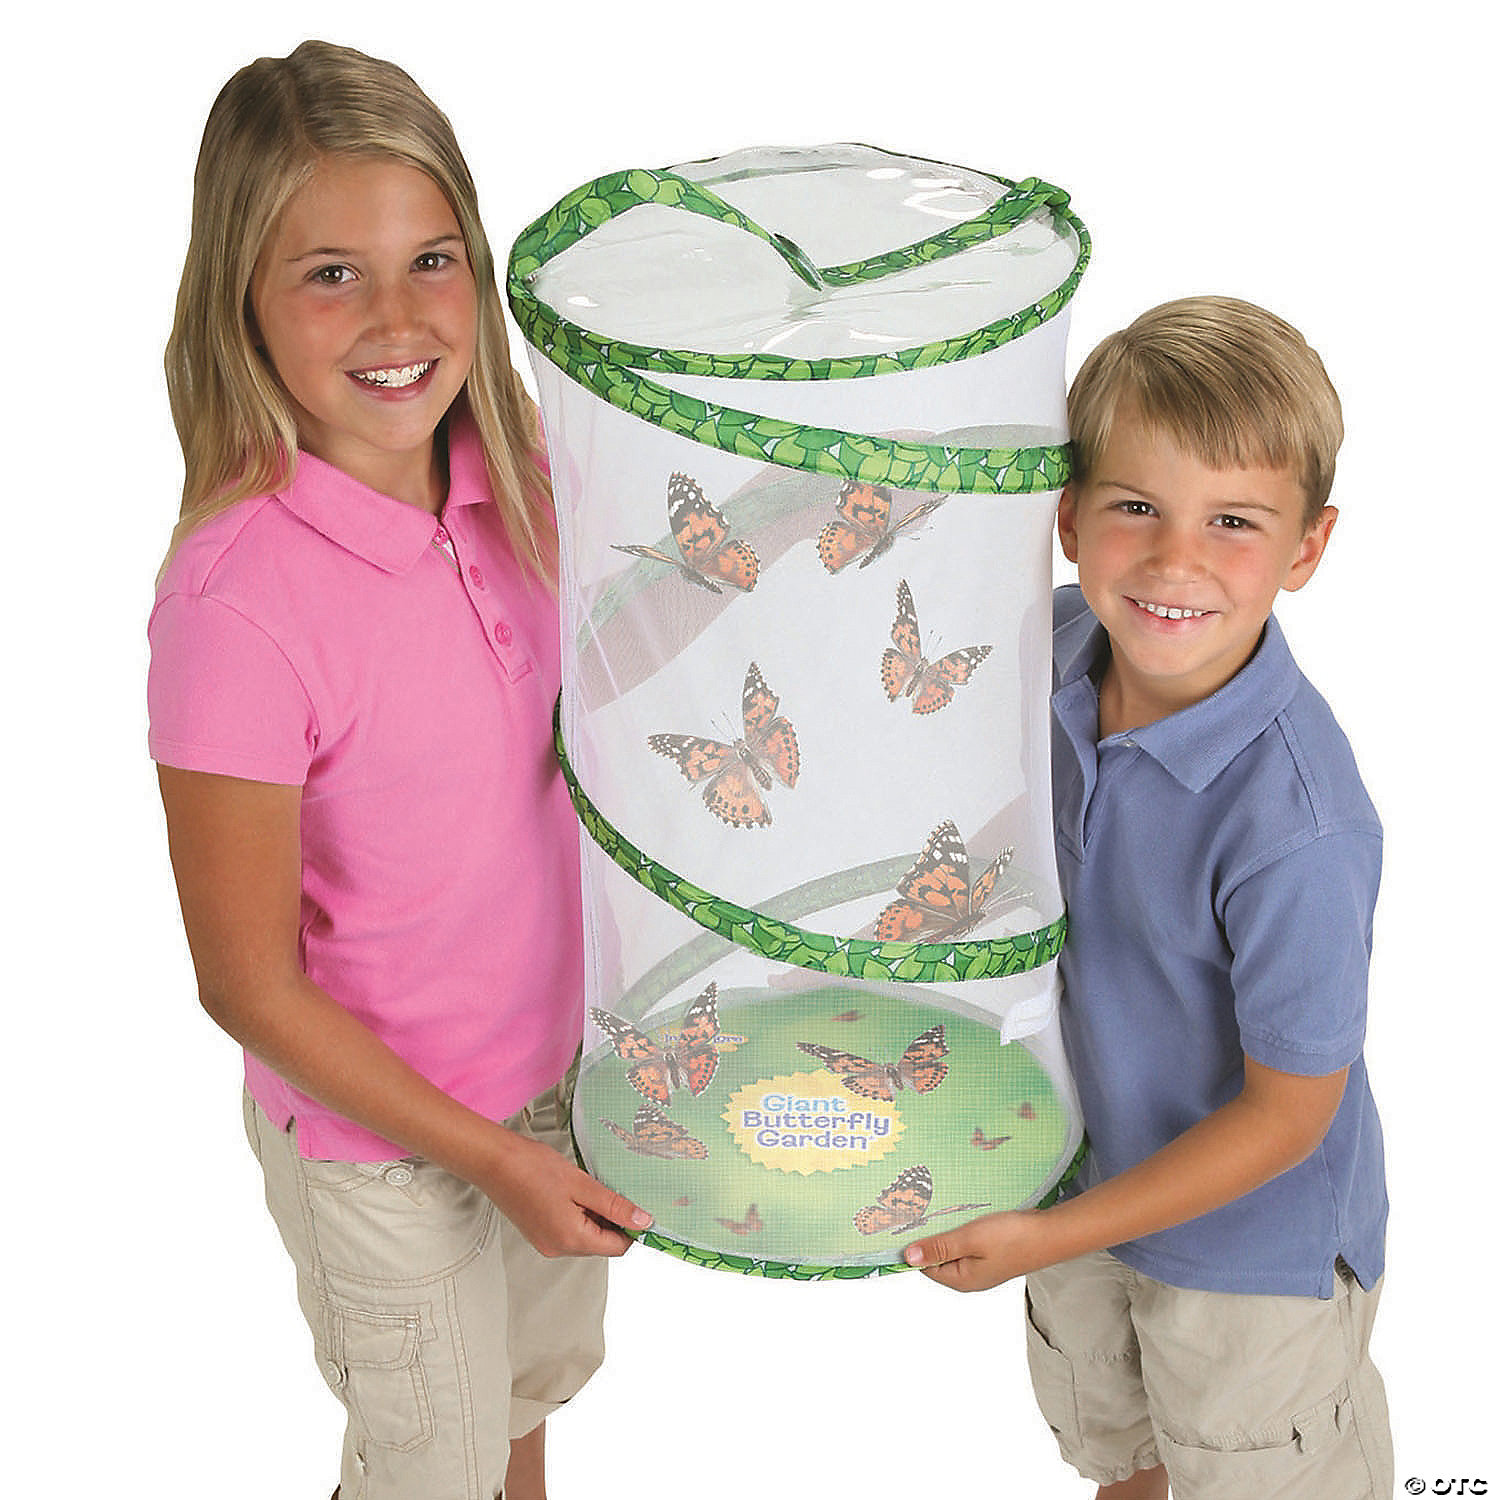 Butterfly Garden Grow Your Own Butterflies Educational Kit For Kids Boy Girl 